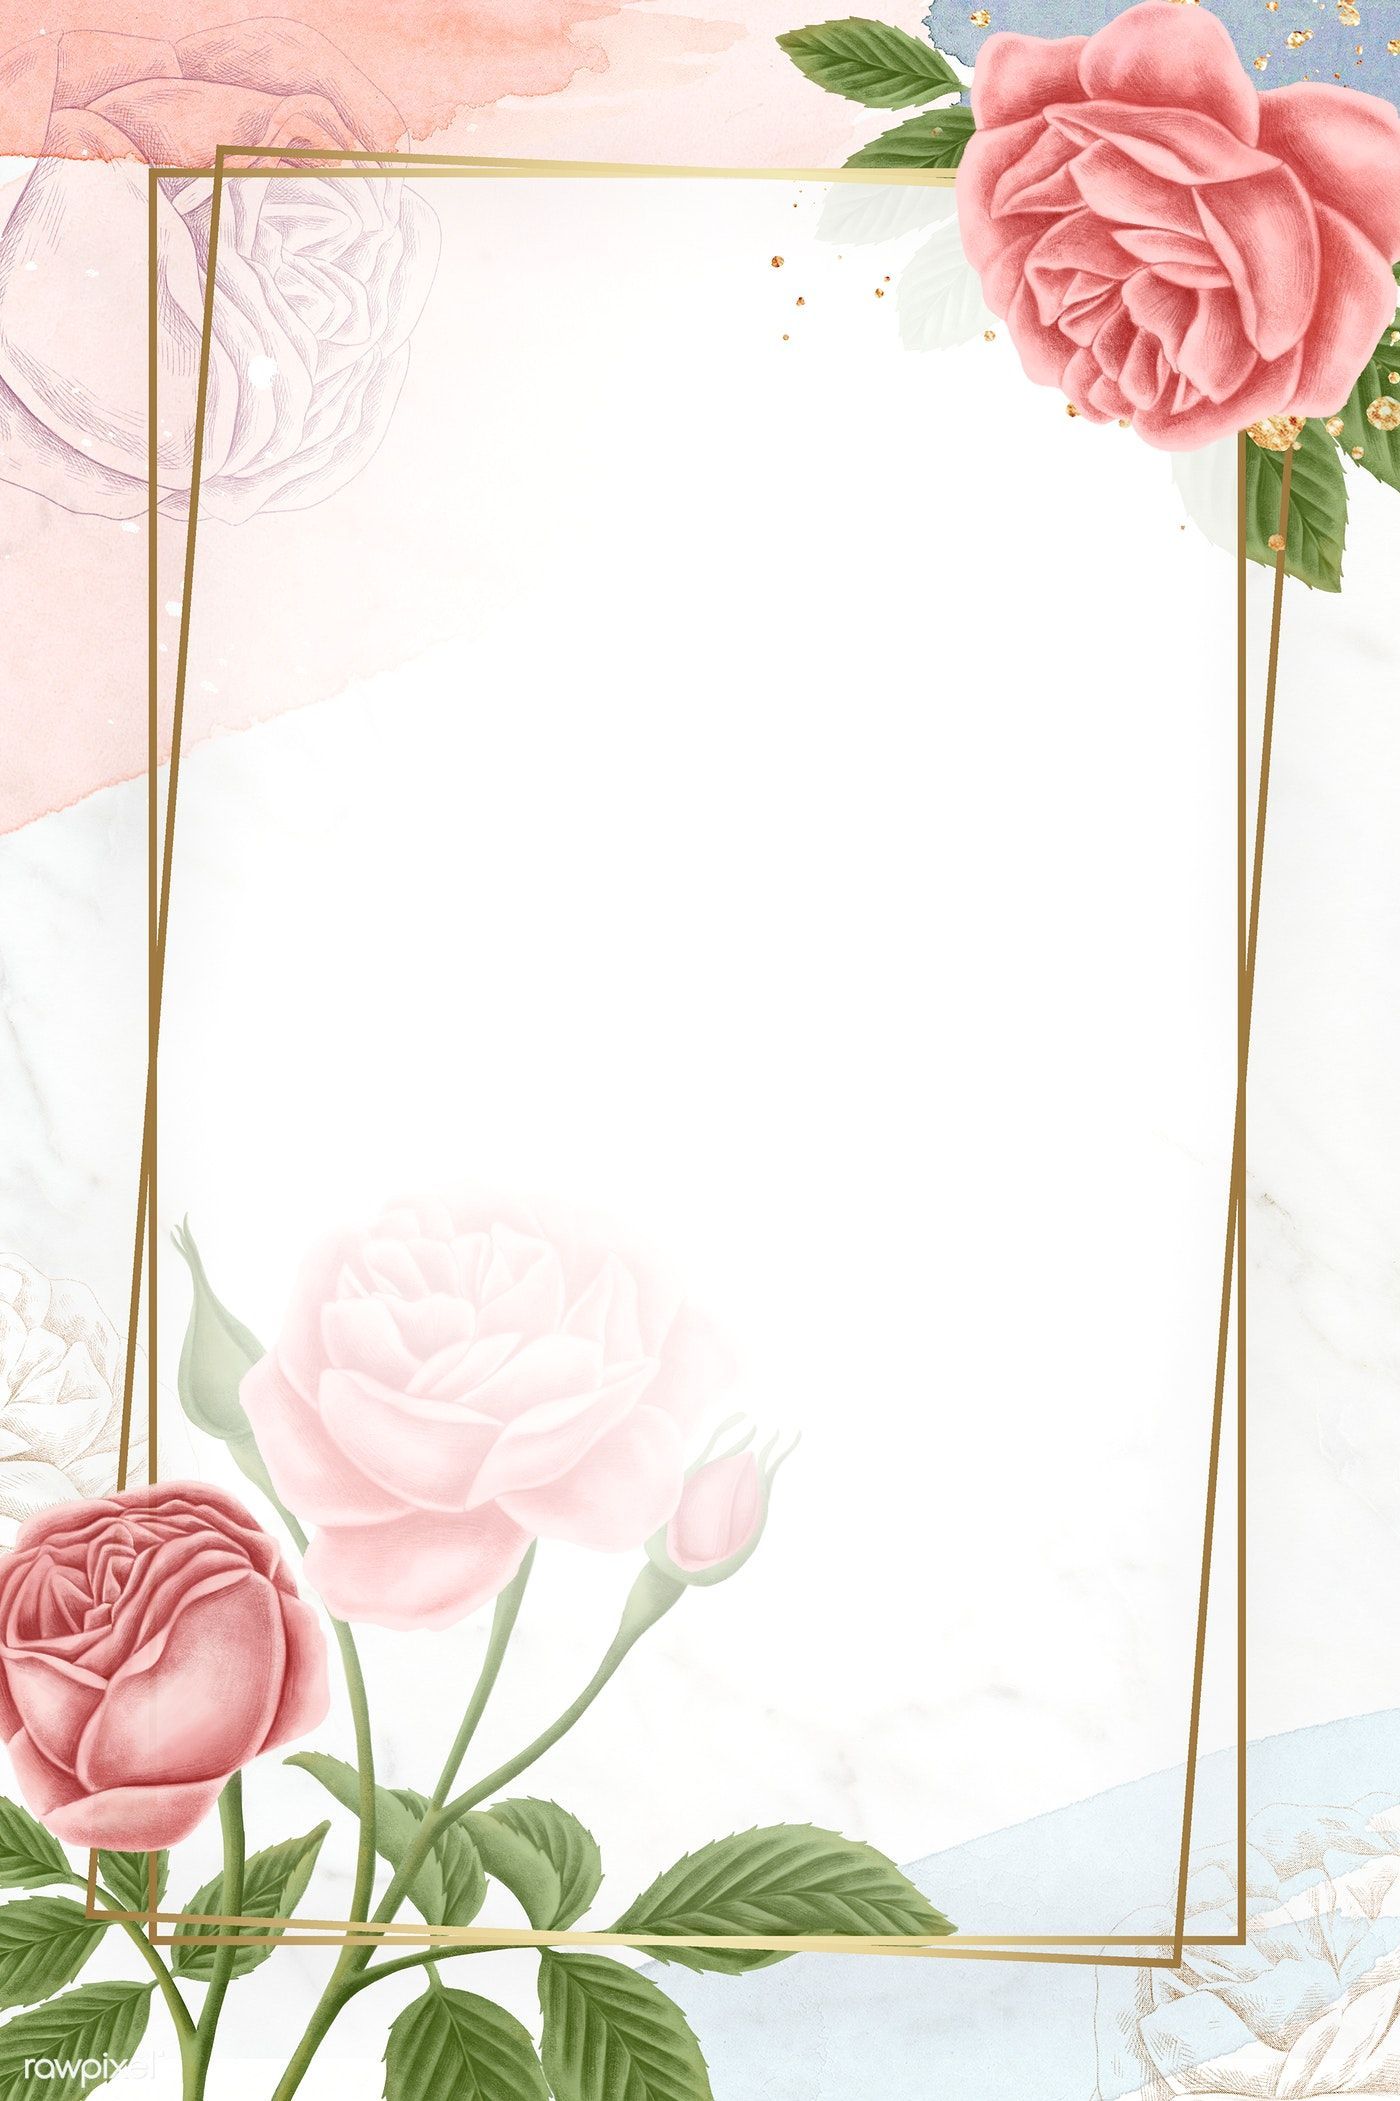 Background Flower Frame .wallpapertip.com